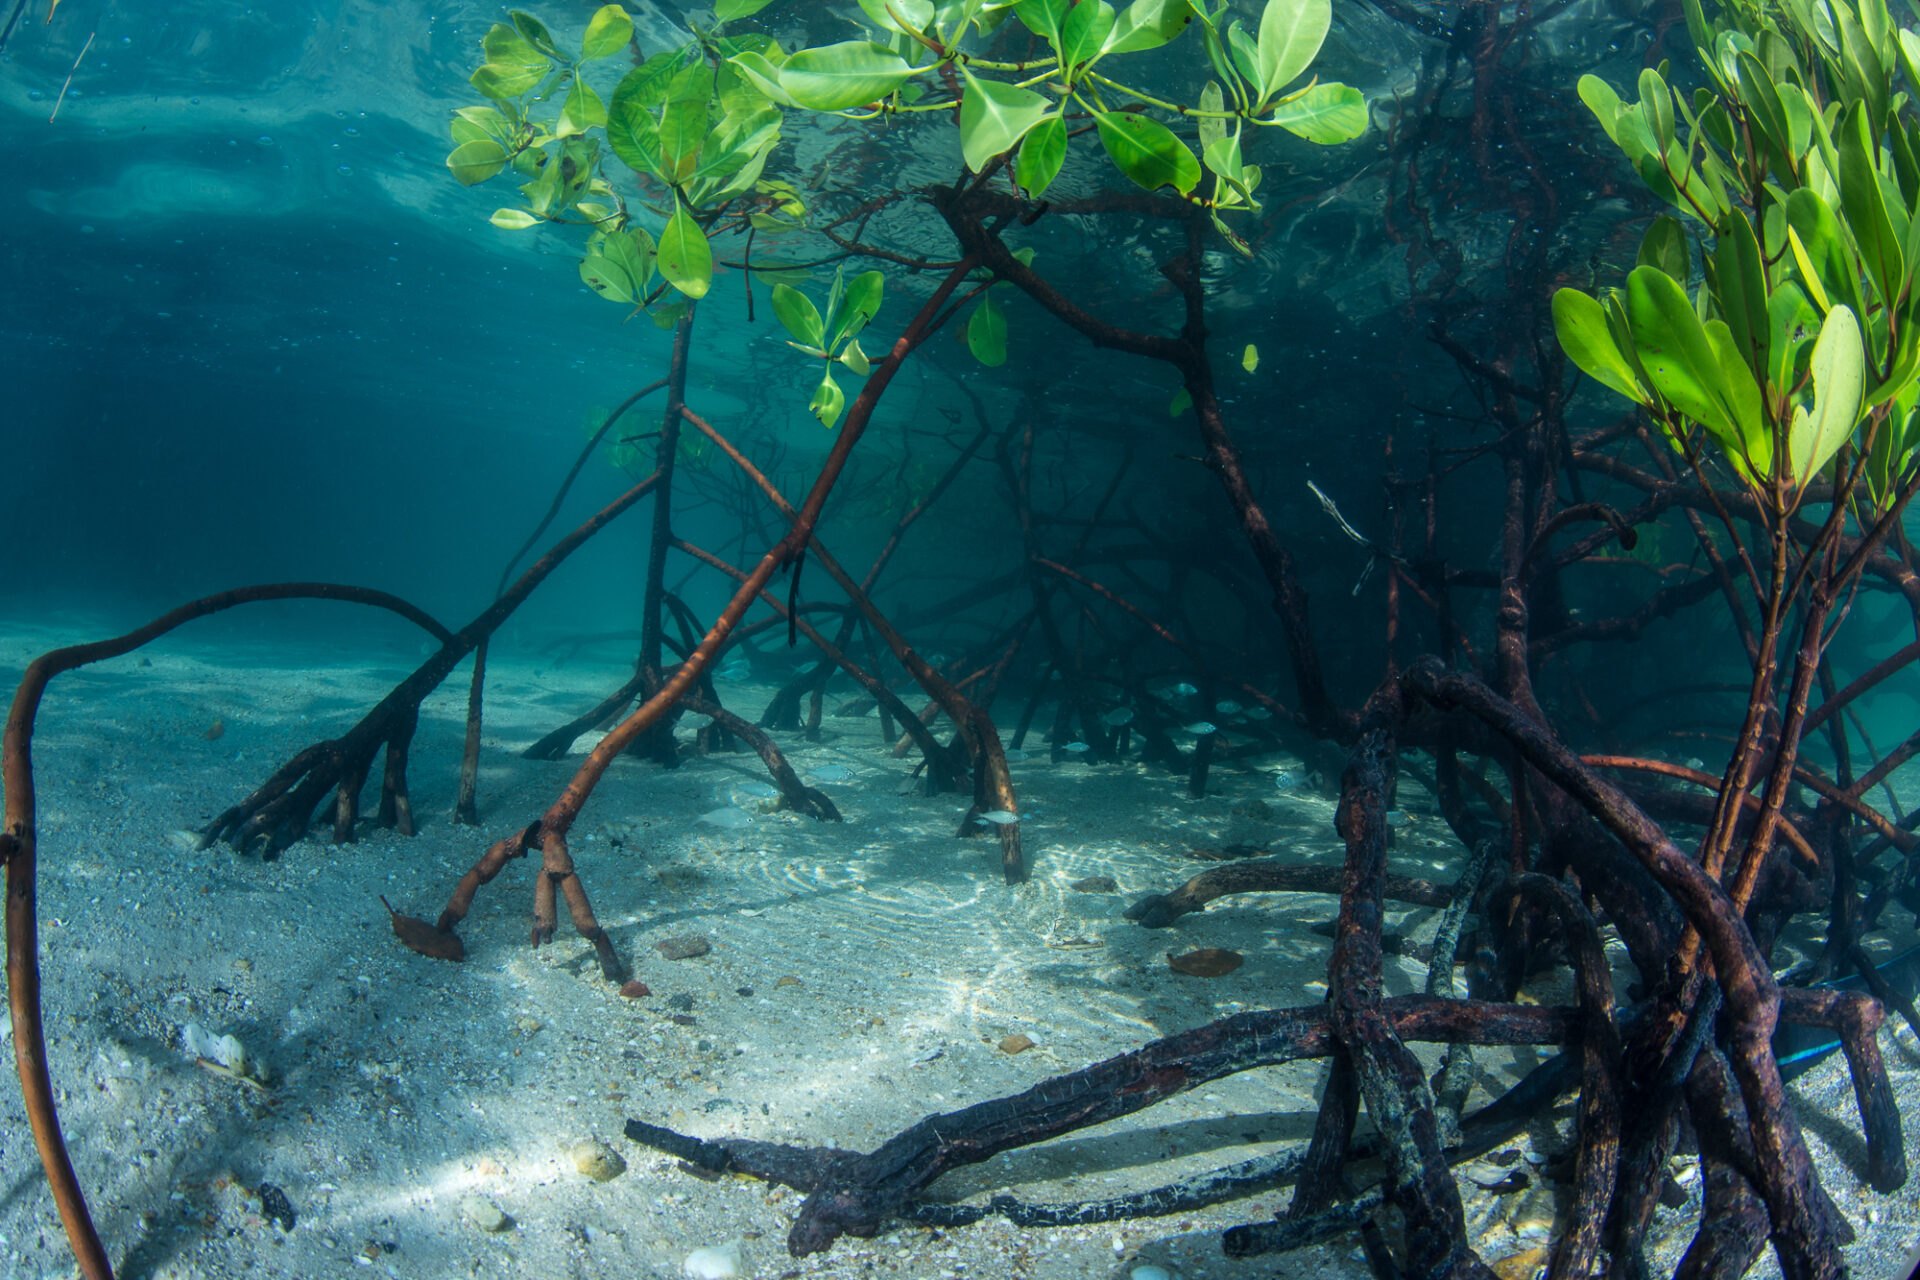 Mangroves Orpheus Island Australia Credit Matt Curnock Ocean Image Bank